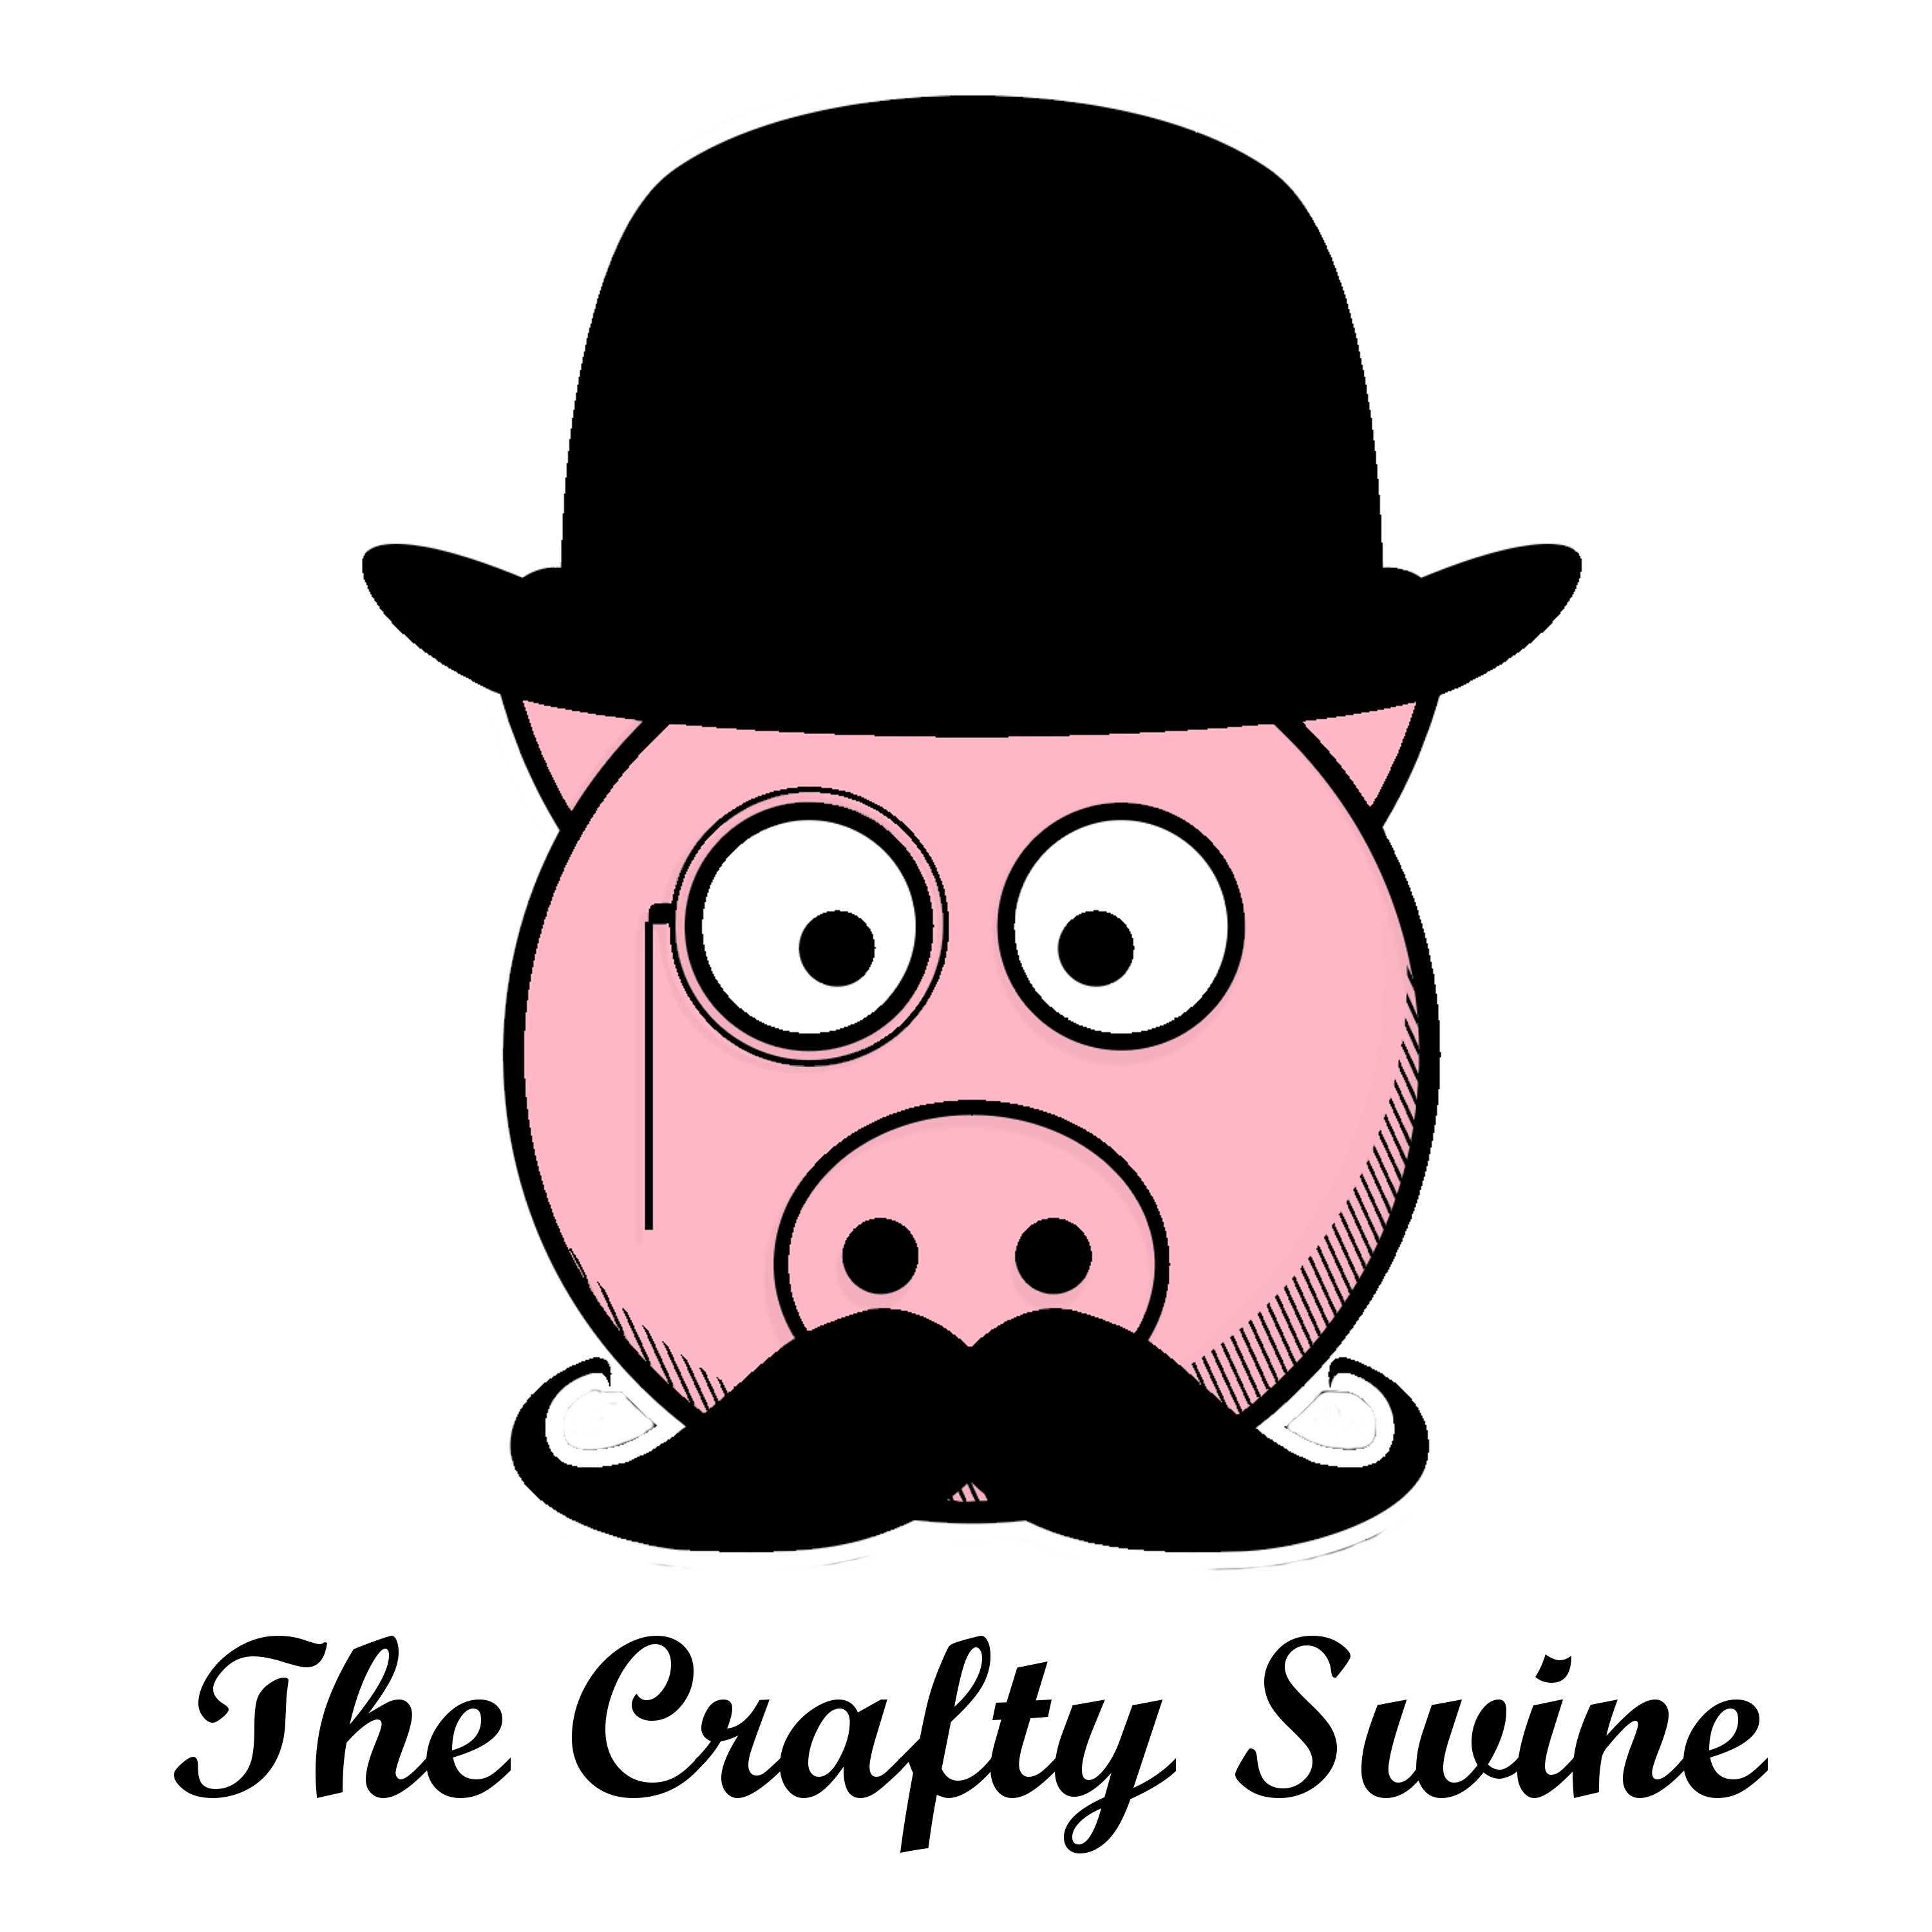 The Crafty Swine